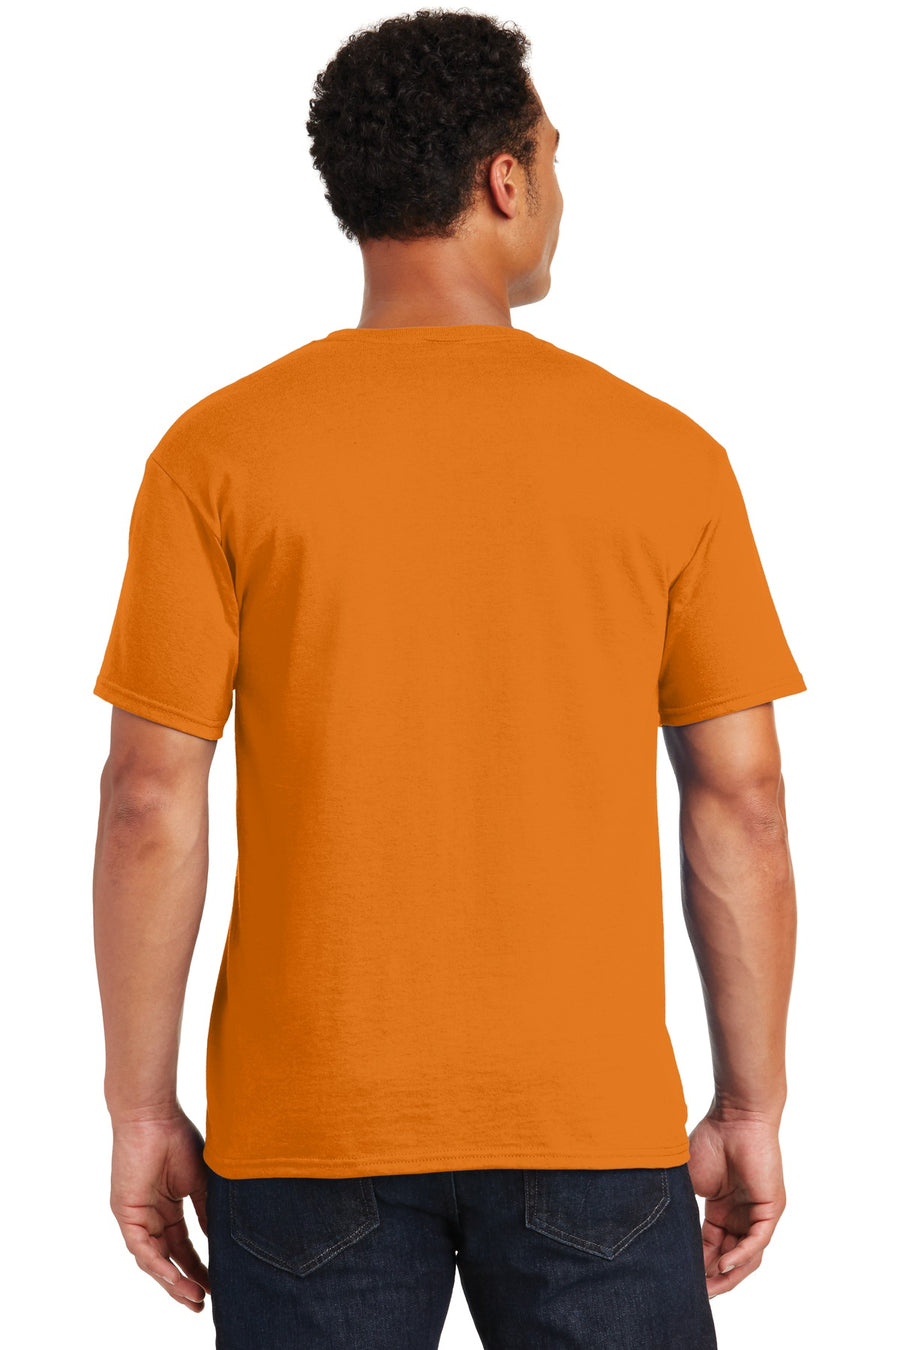 29M-Tennessee Orange-back_model